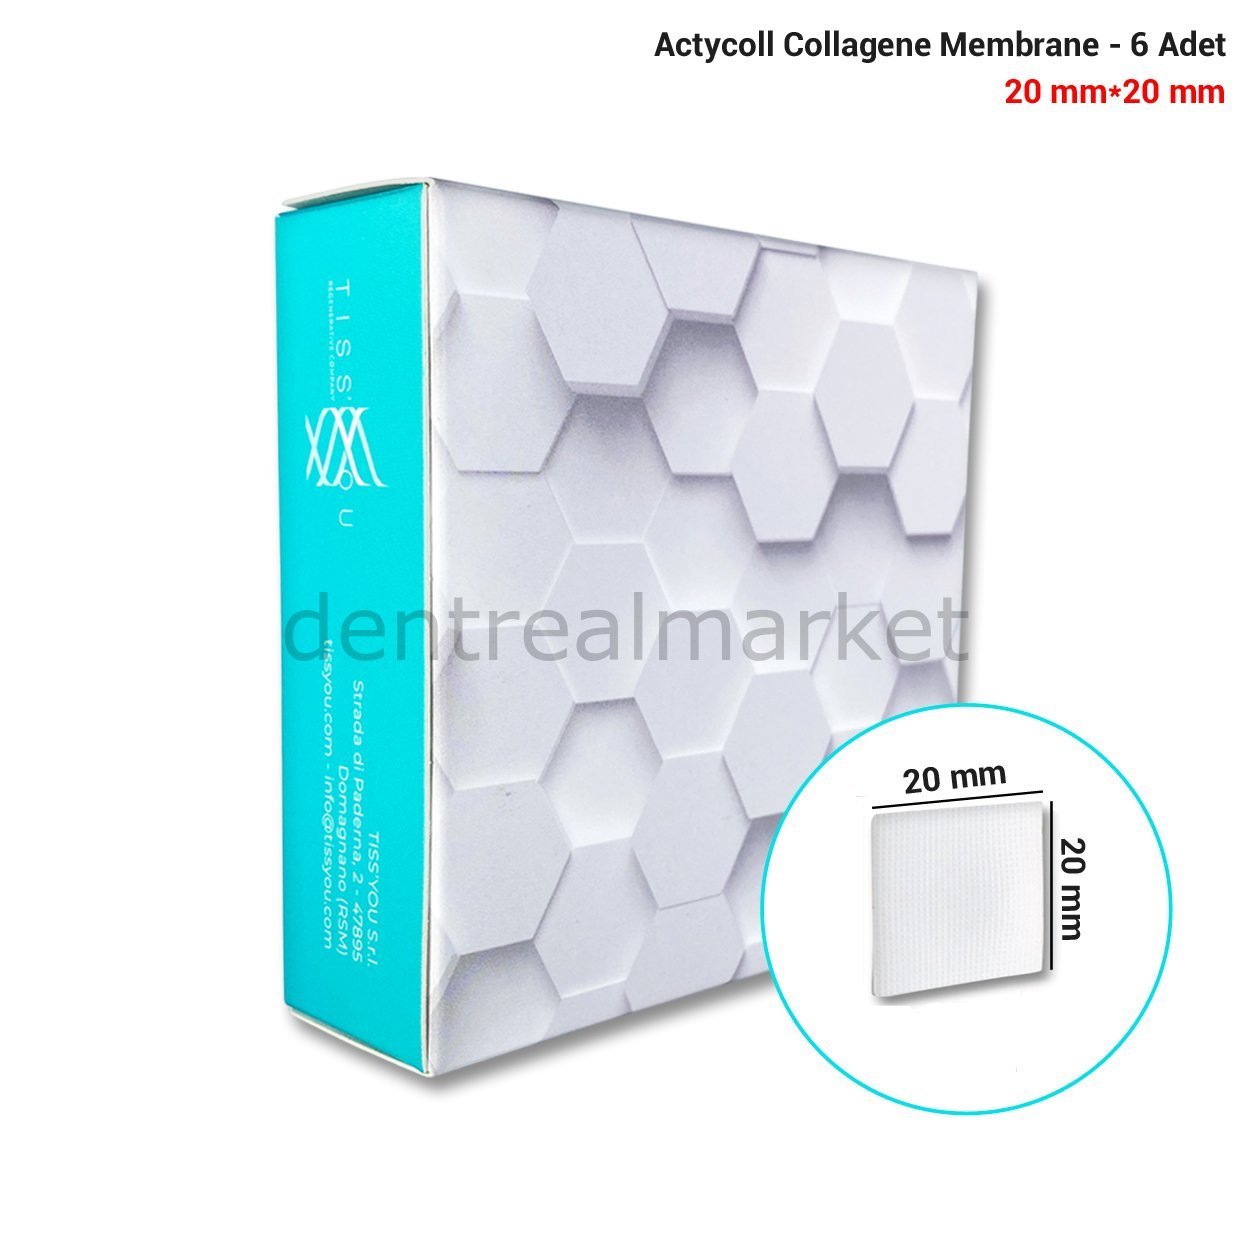 DentrealStore - Actycoll Dental Collagene Membrane - 20*20 mm - 6 Pcs